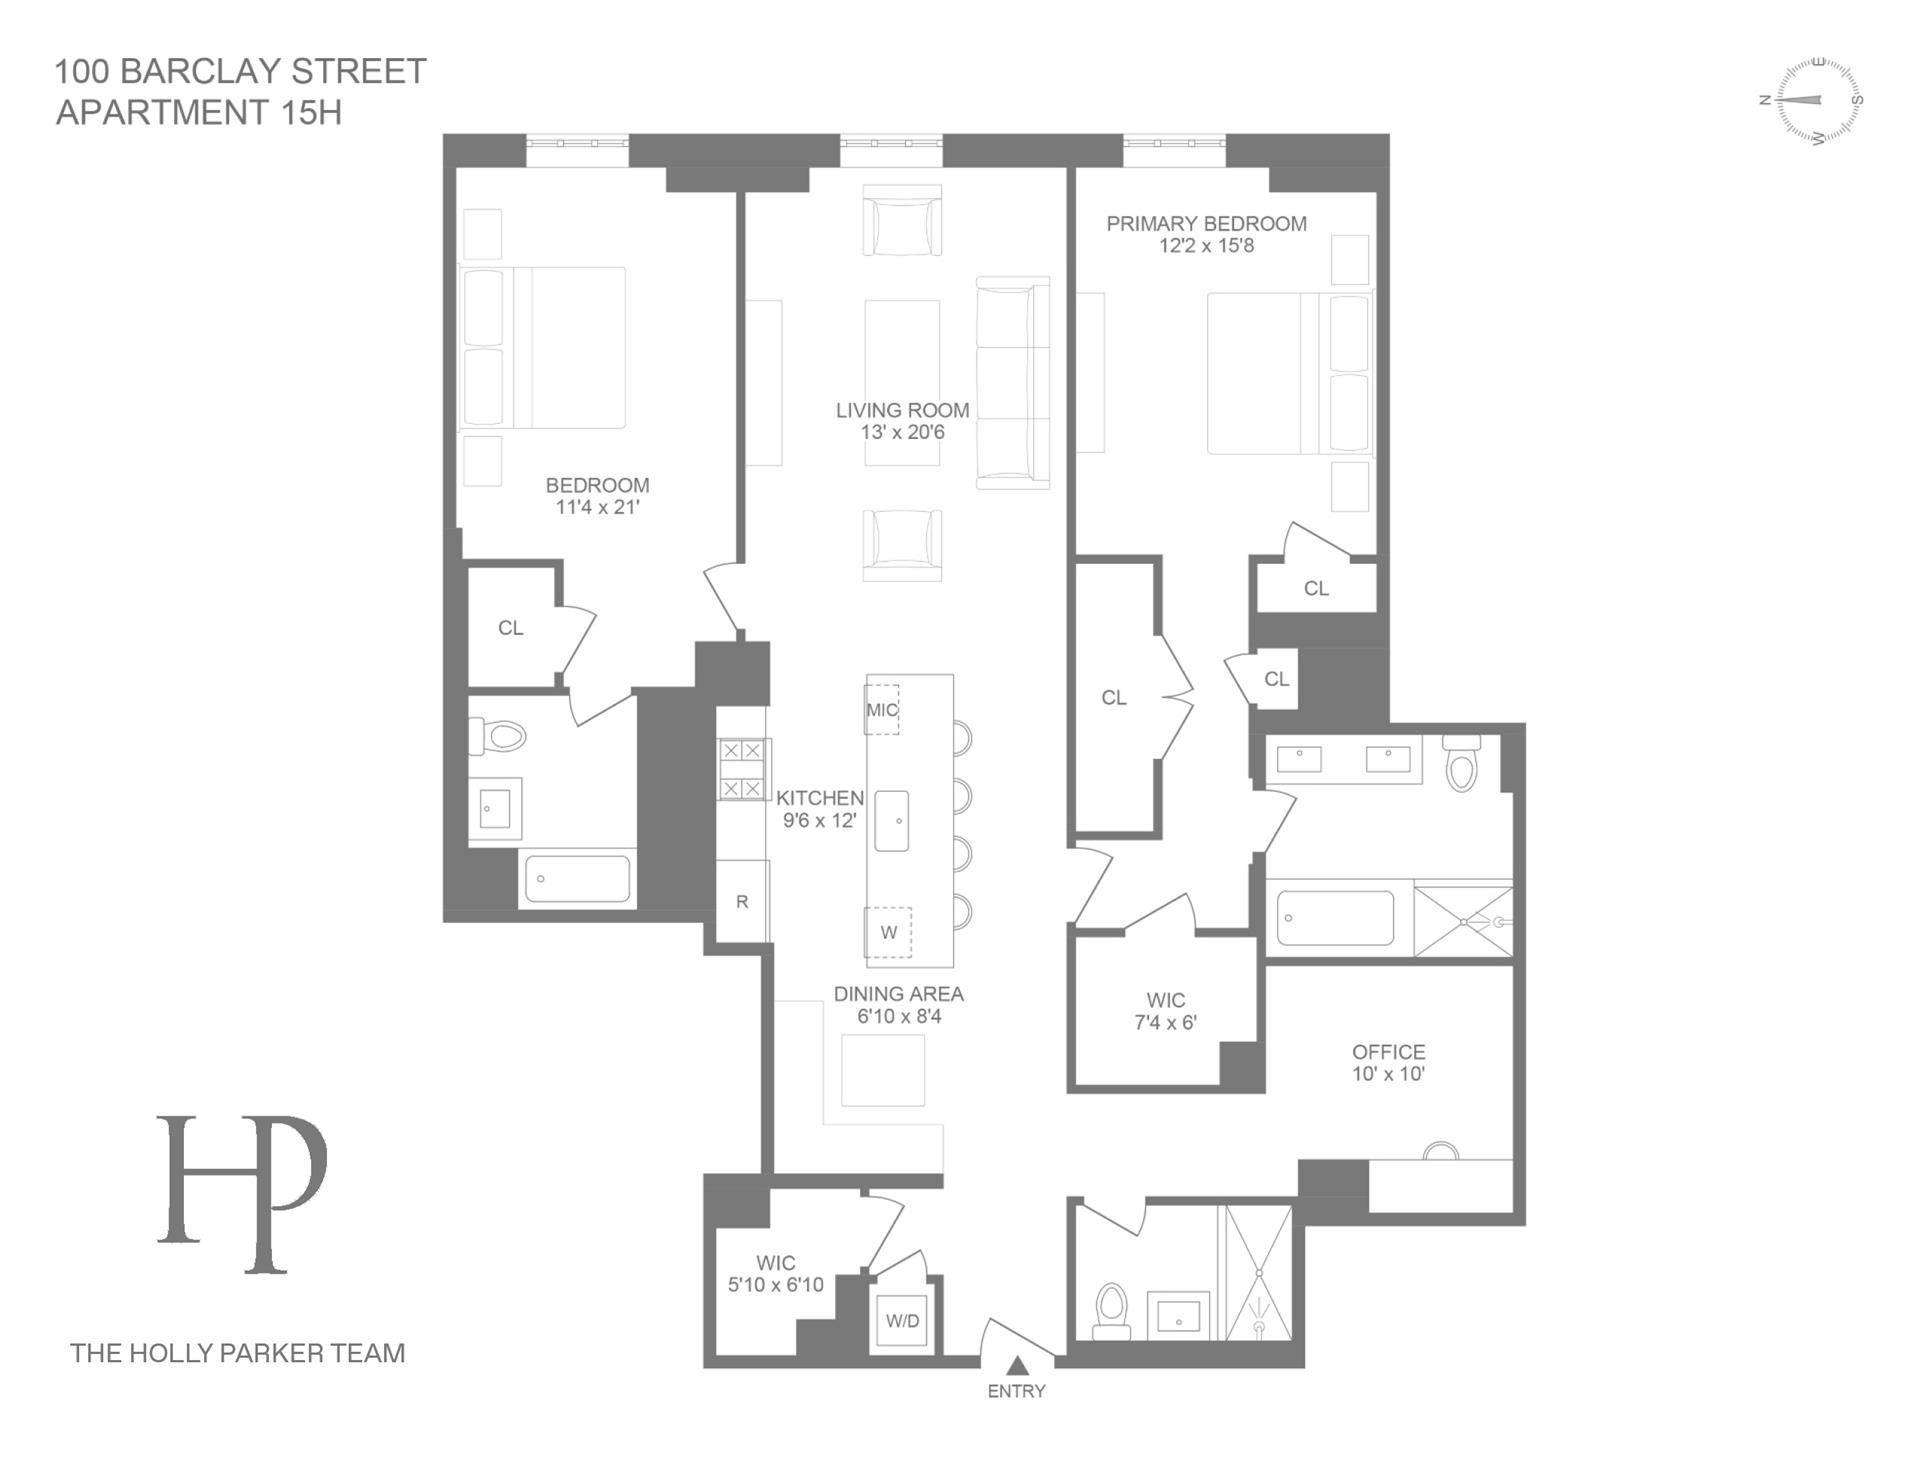 Floorplan for 100 Barclay Street, 15H